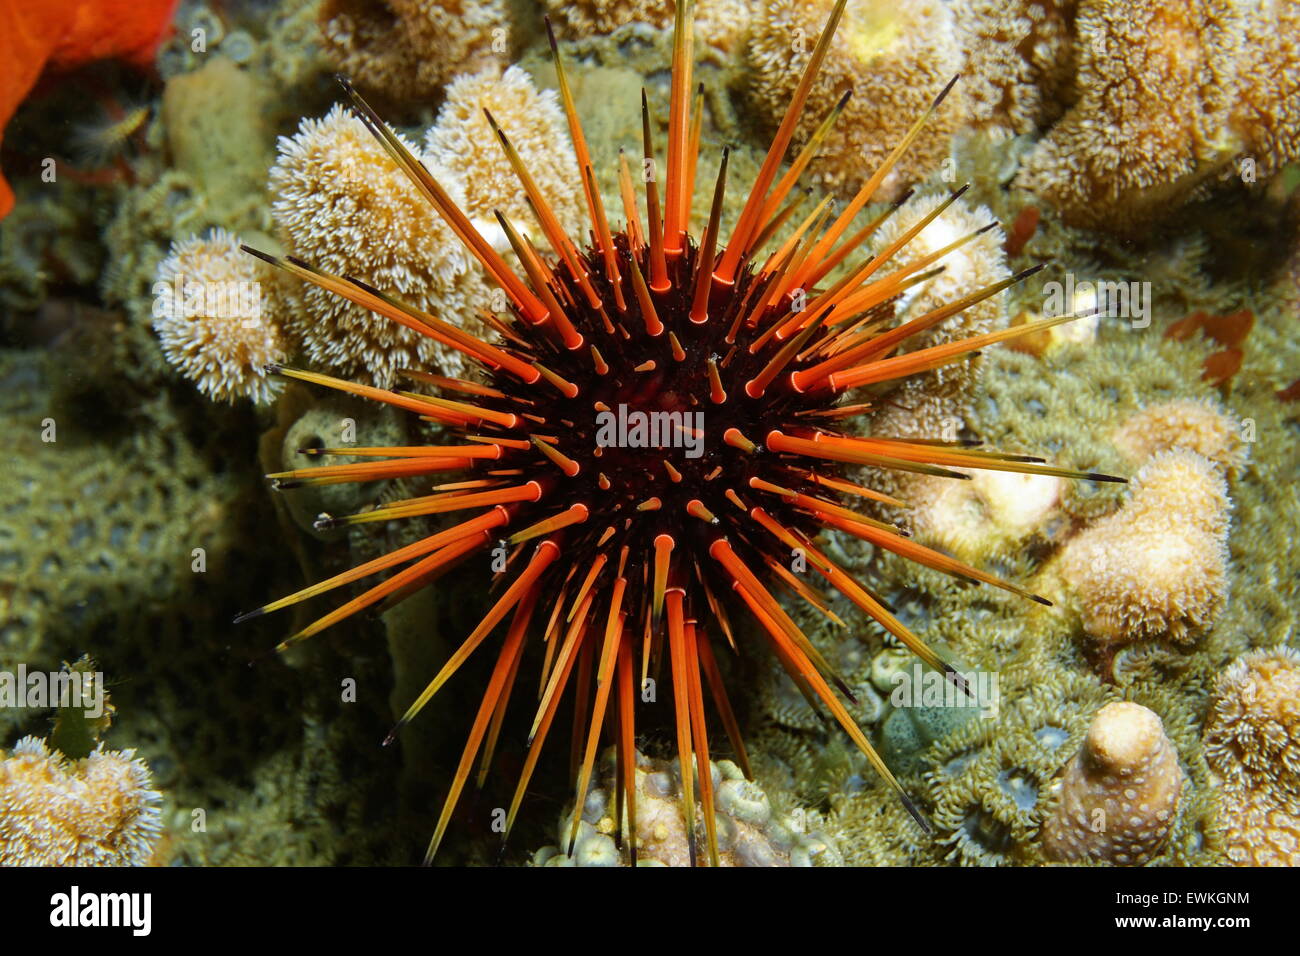 Live specimen of a reef urchin, Echinometra viridis, underwater in the Caribbean sea, Panama Stock Photo